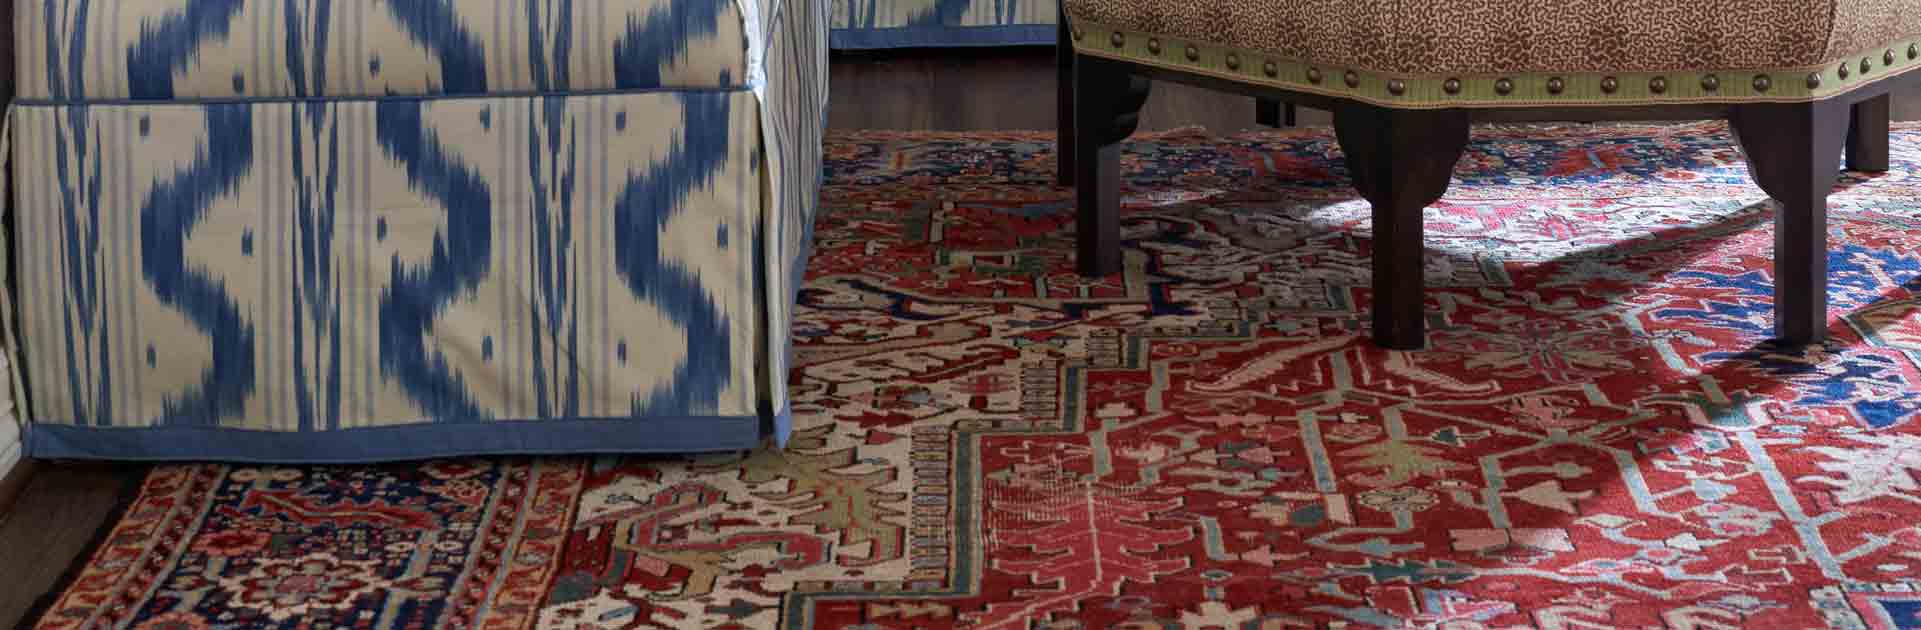 Antique Persian Rugs Carpets DFW Dallas